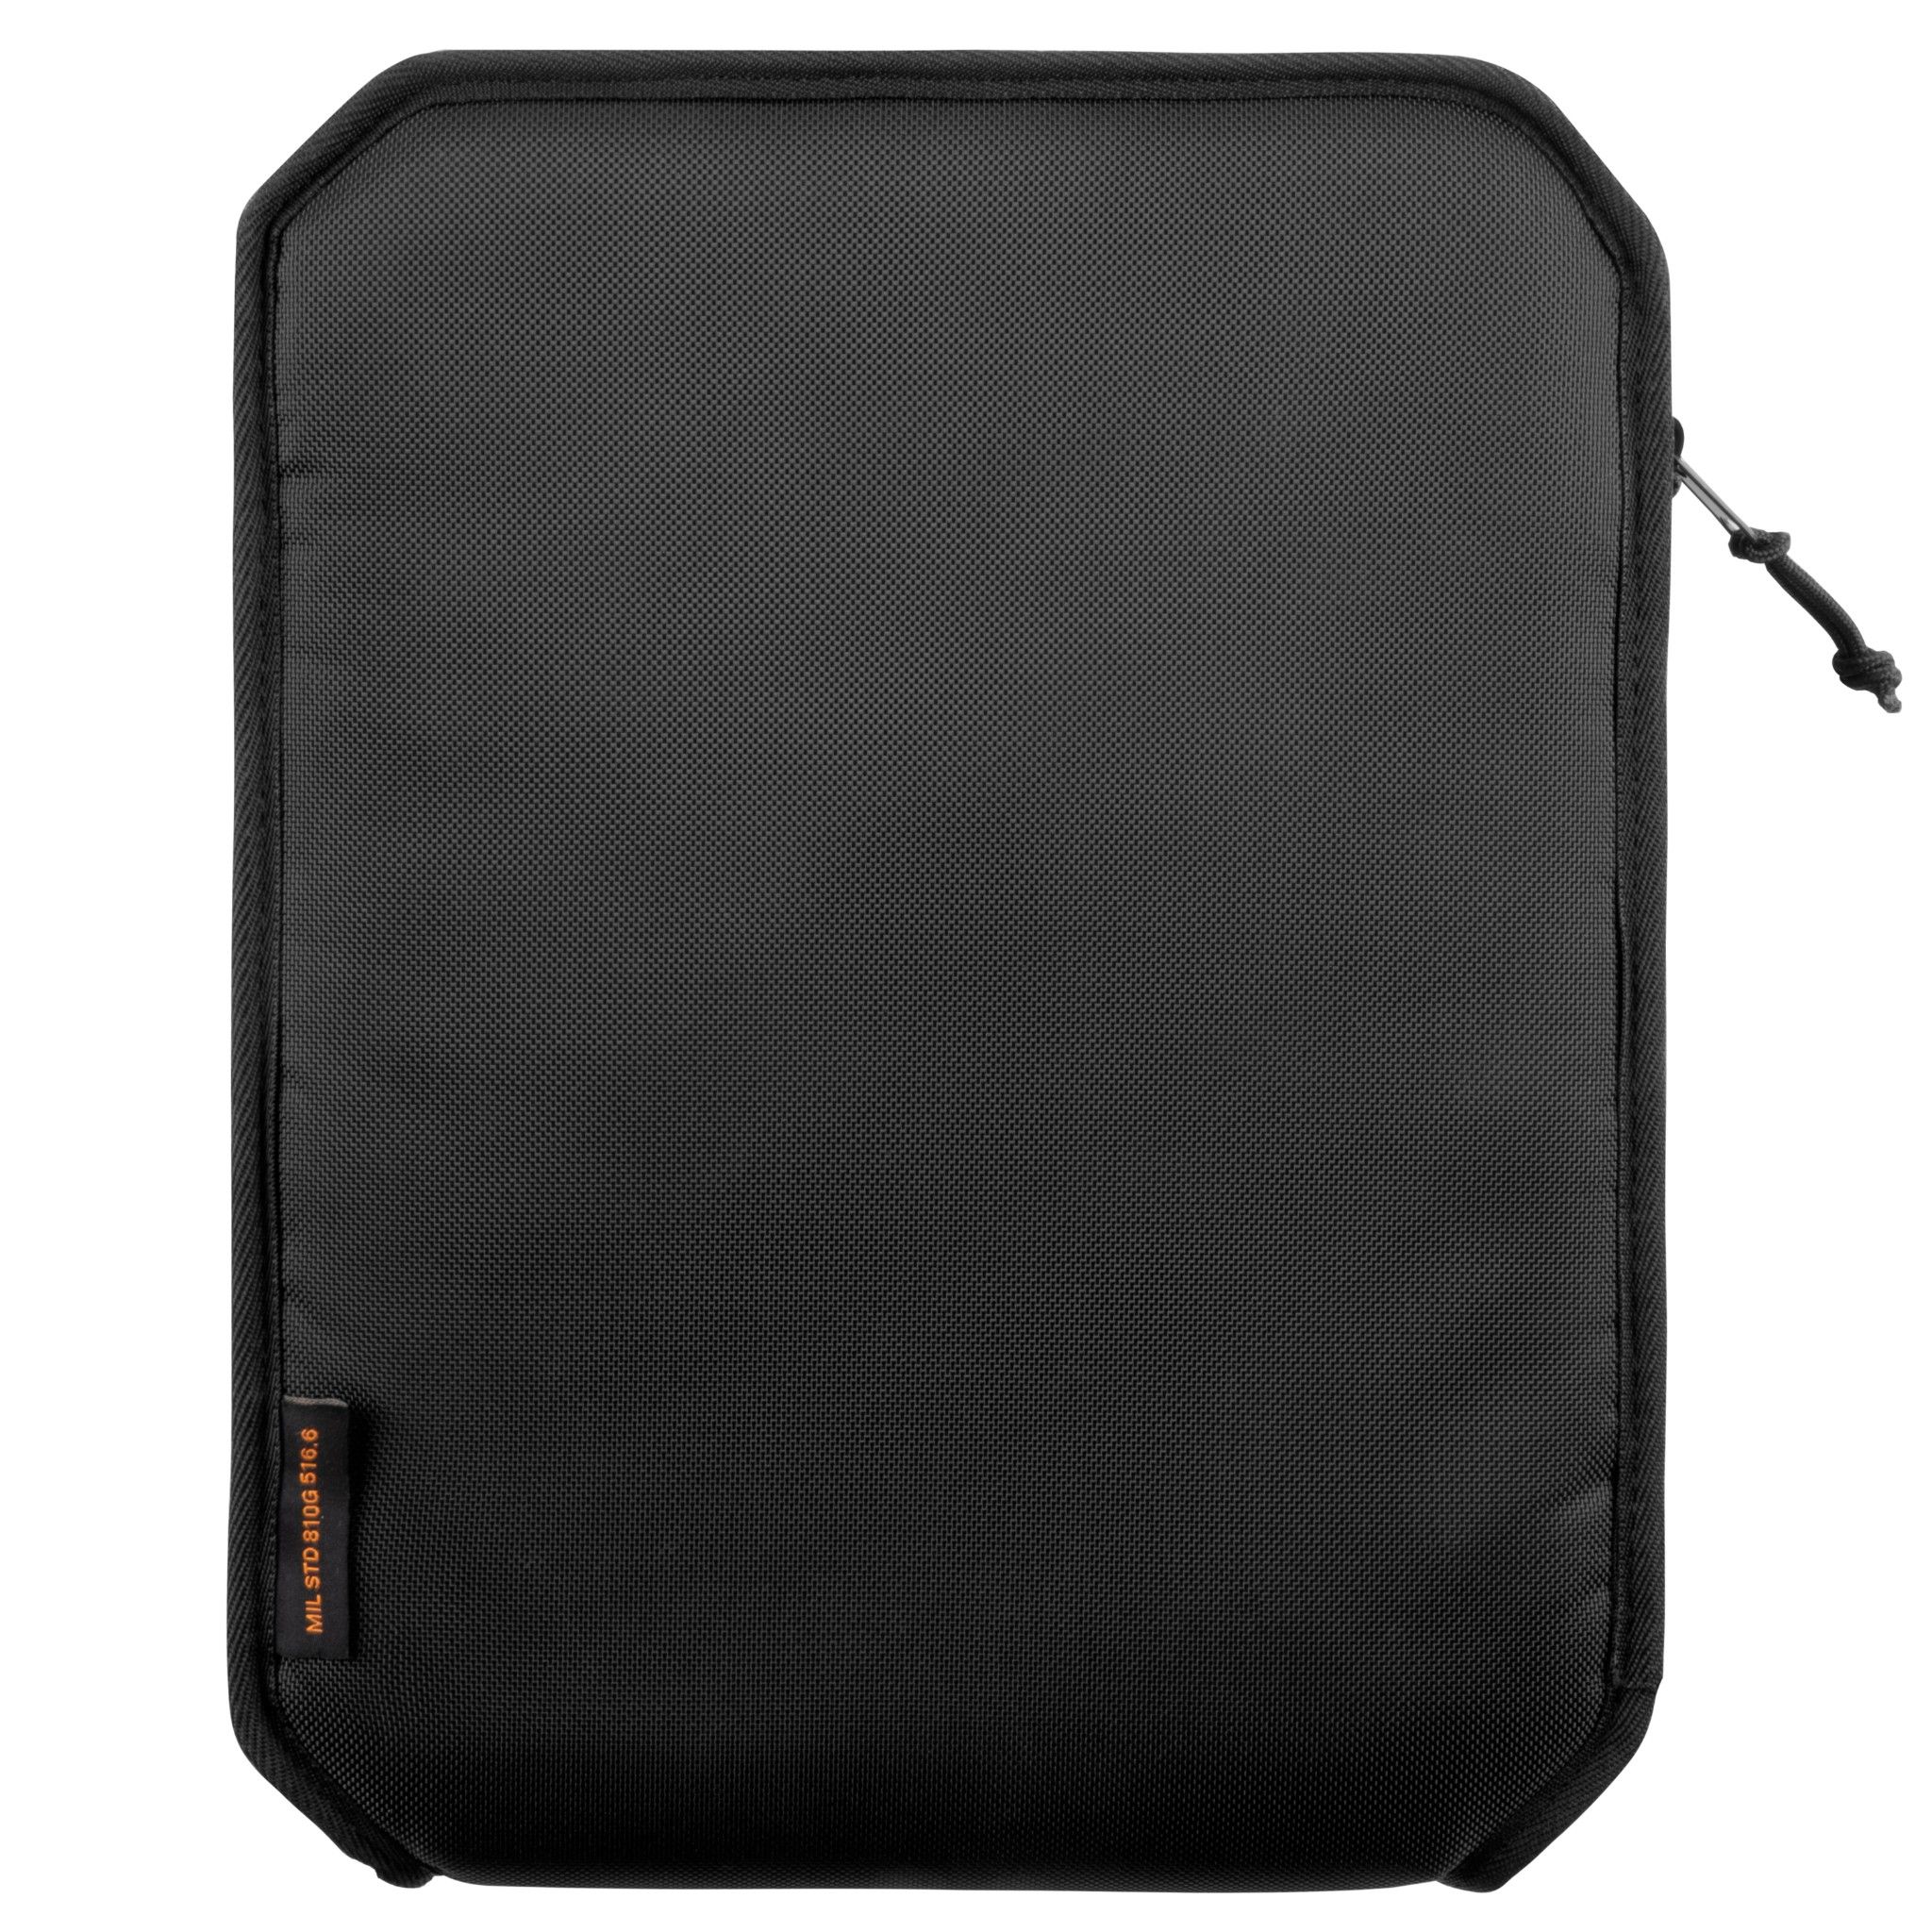  Túi chống sốc UAG Shock Sleeve Lite cho iPad Pro 12.9